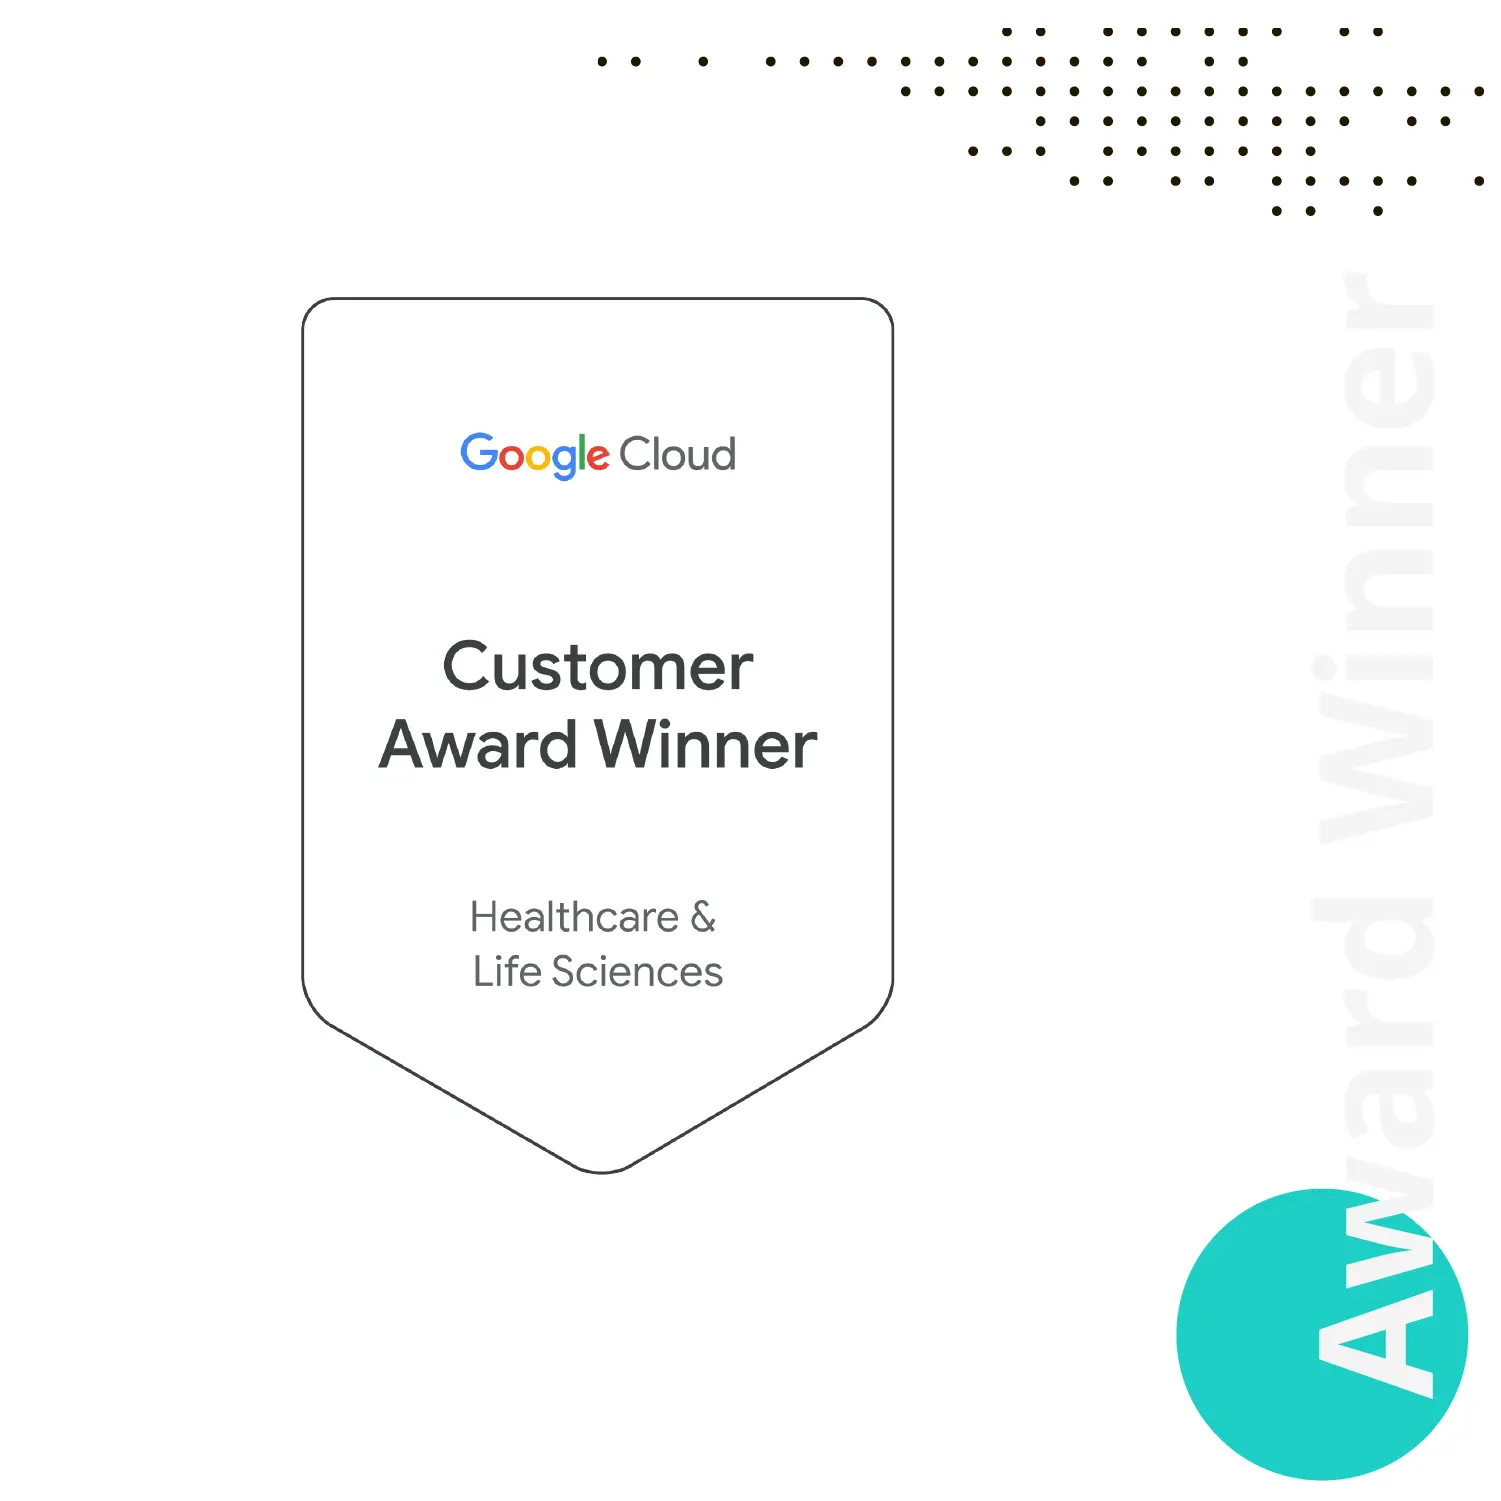 Chmura Krajowa laureatem Google Cloud Customer Award za projekt e-Rejestracji dla CeZ